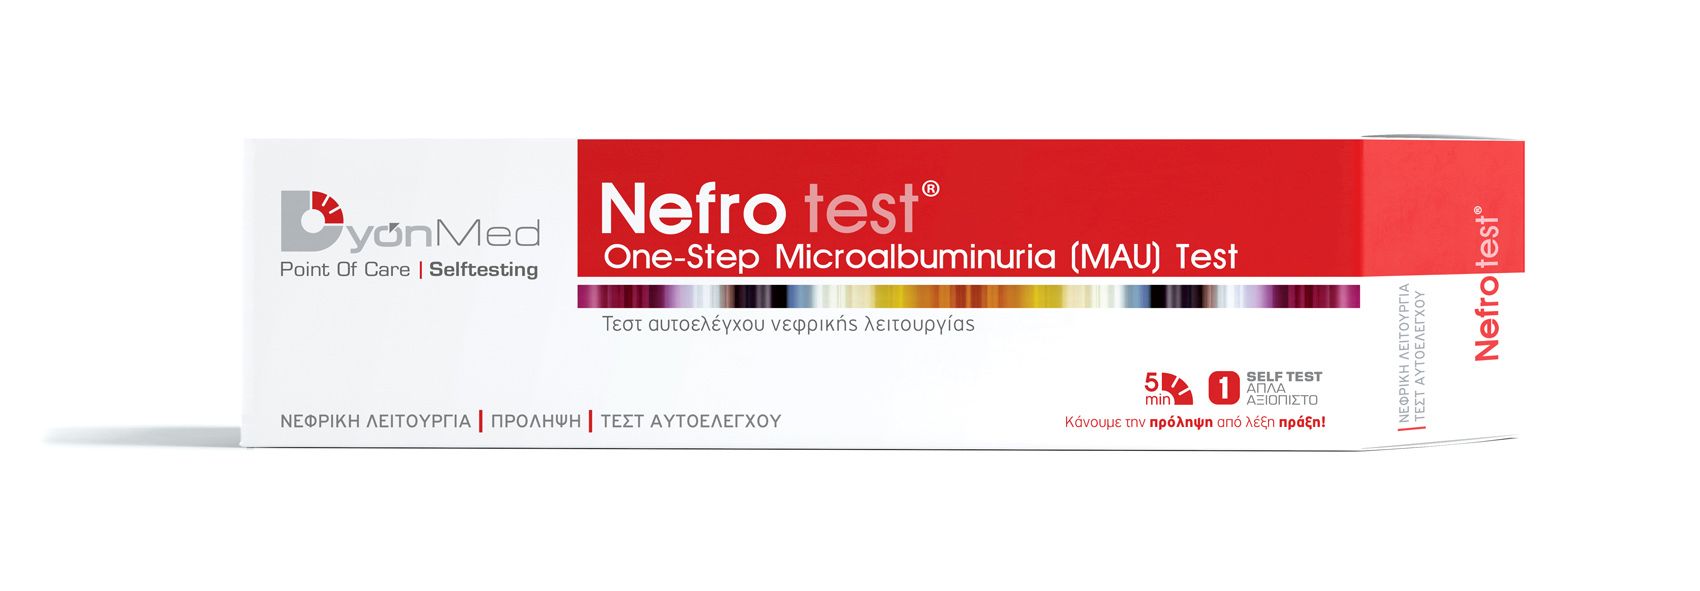 Nefro test νεφρικη λειτουργια 1τμχ